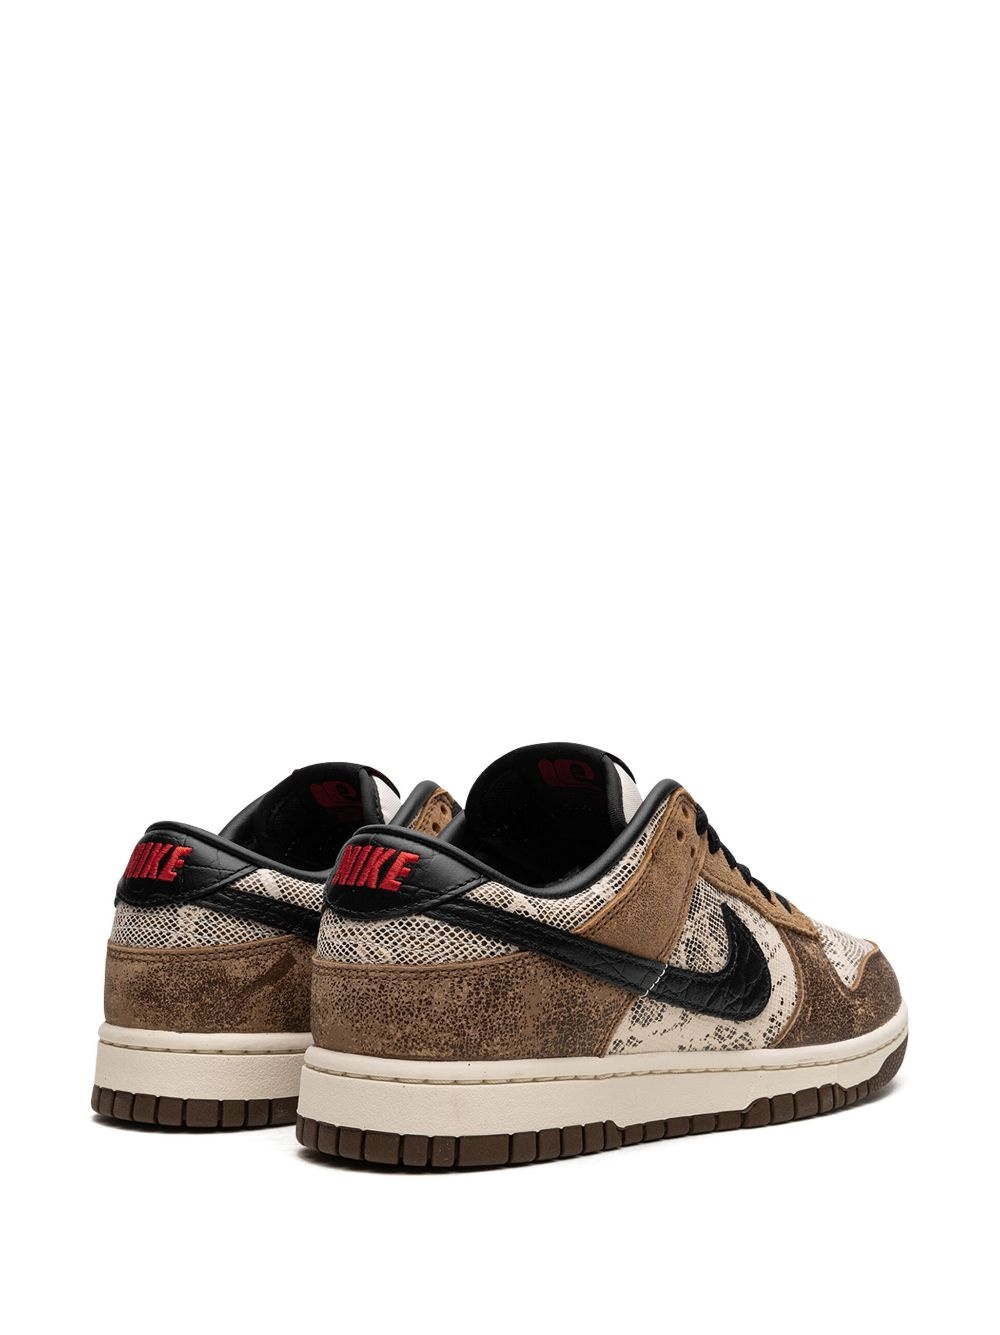 Dunk Low Co.Jp Premium "Brown Snakeskin" sneakers - 3